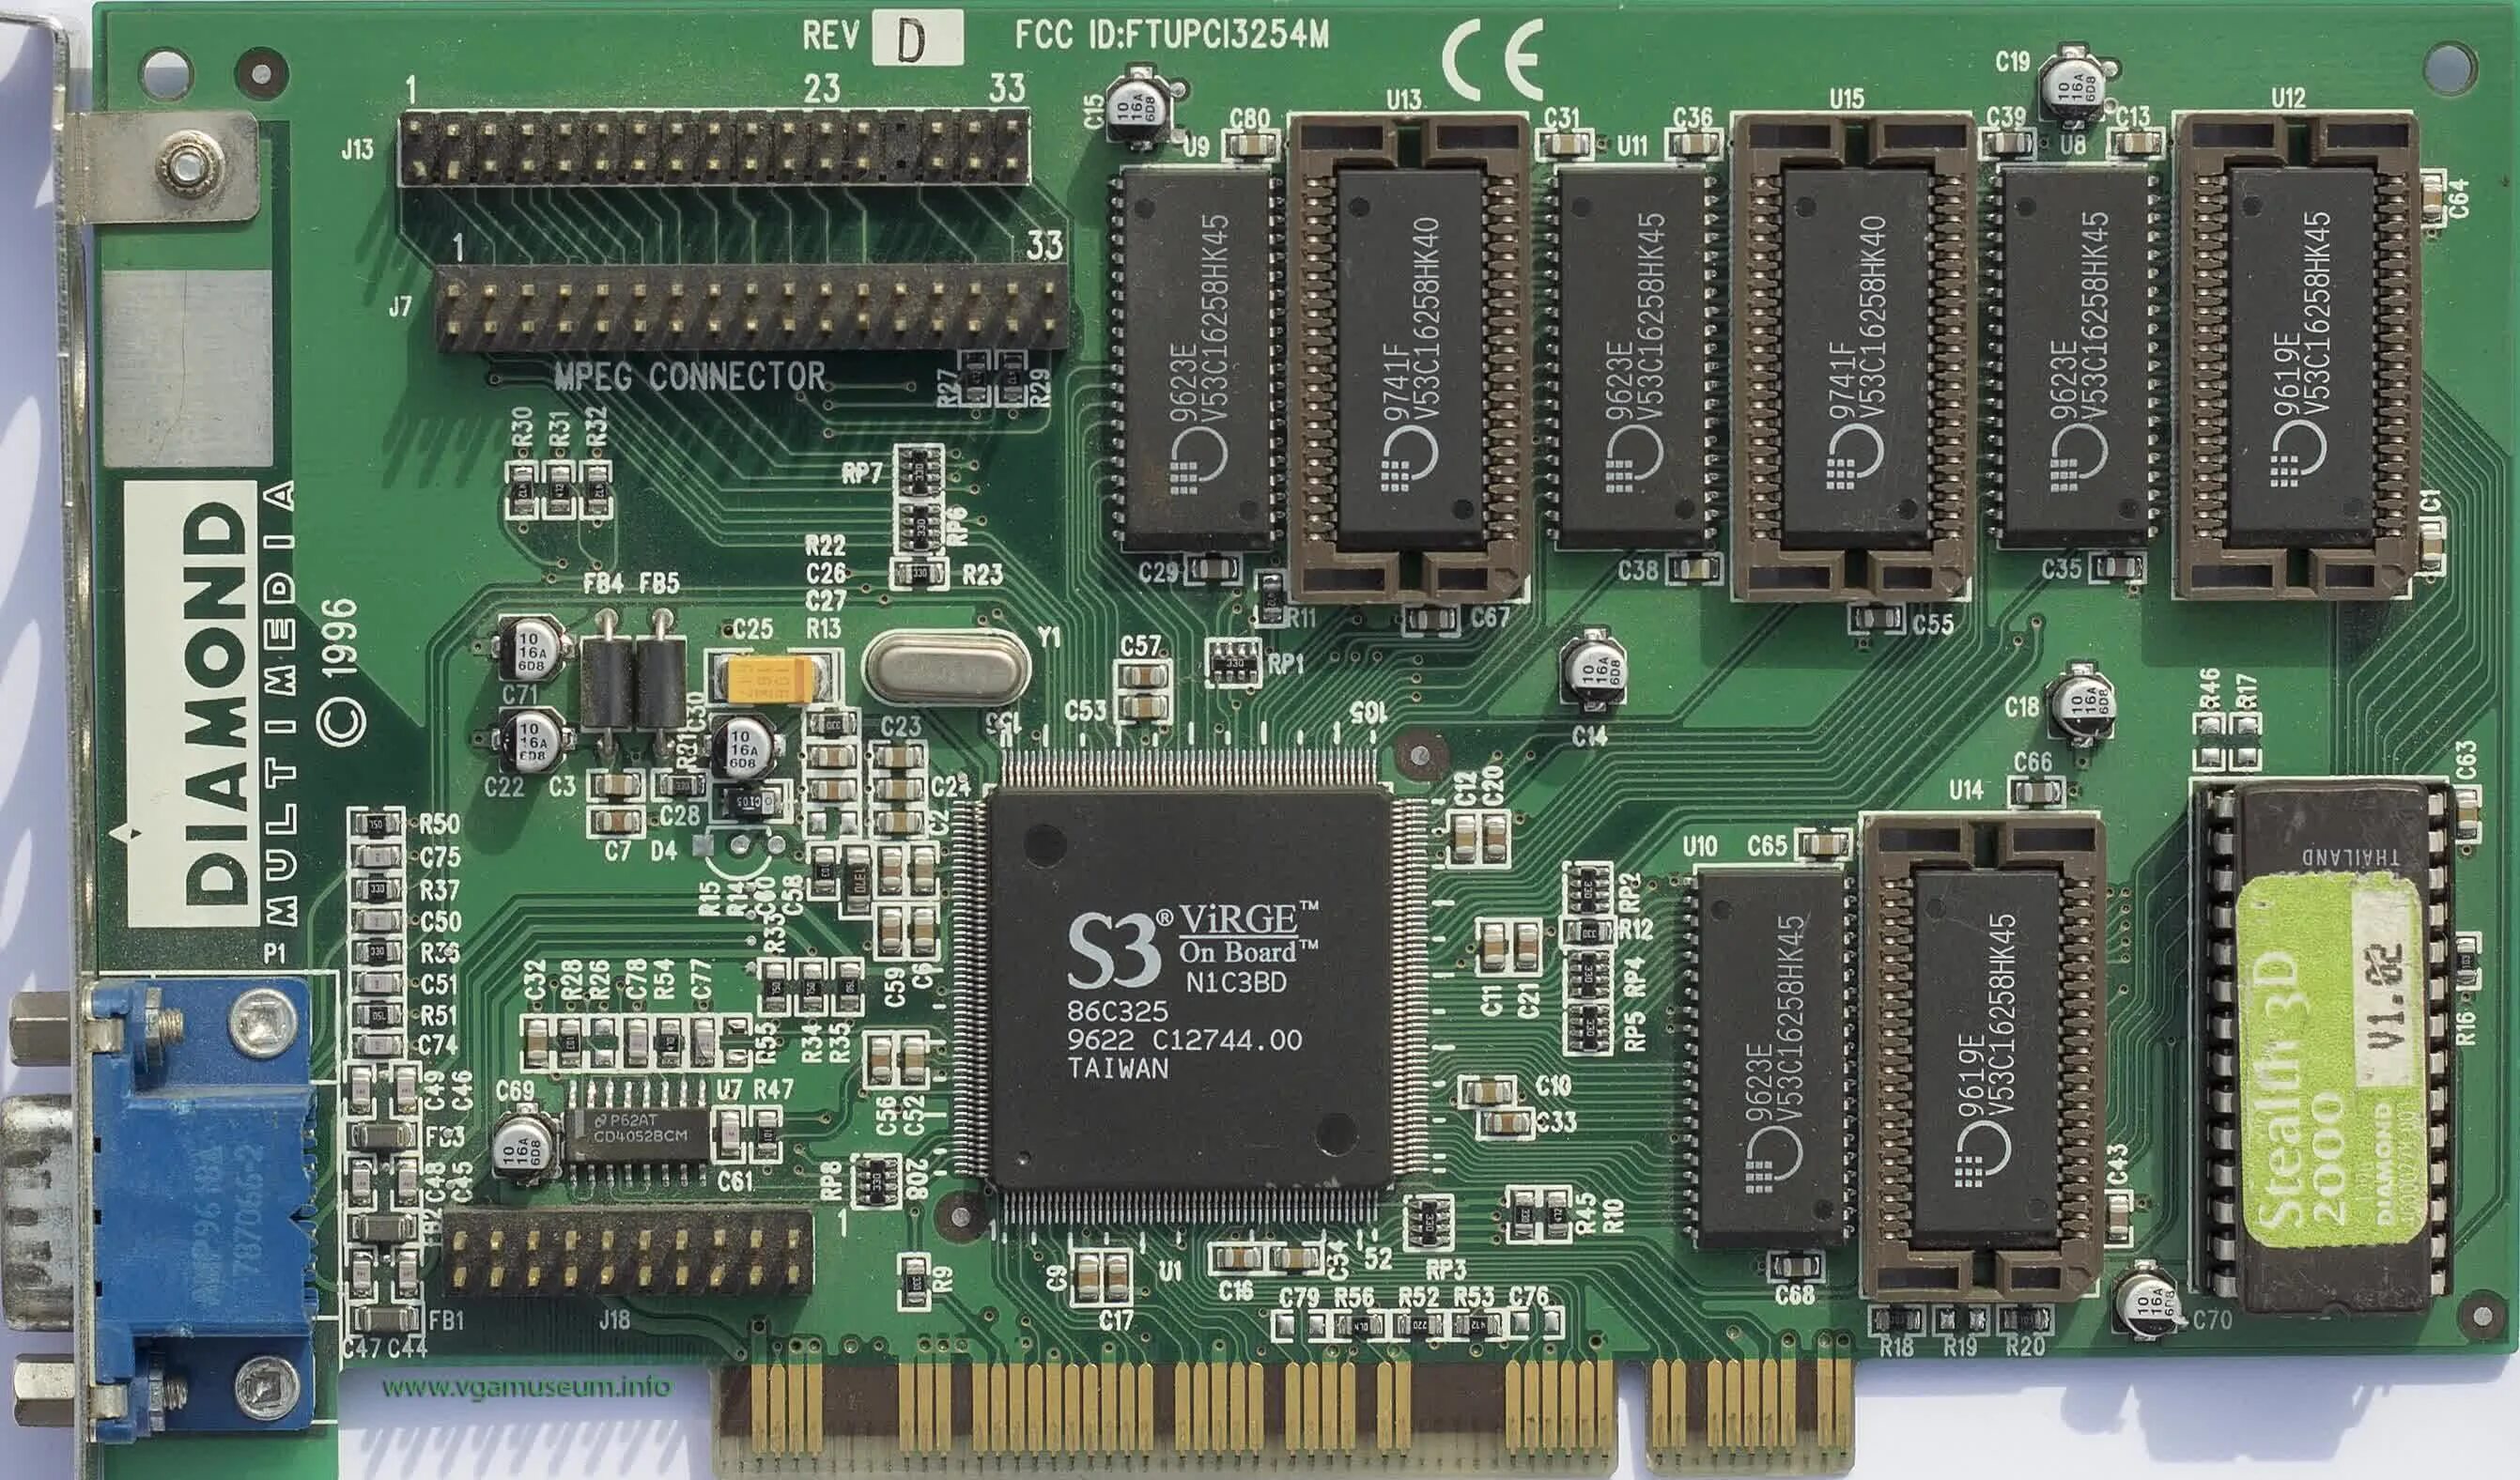 Jbx graphics 3. S3 Virge чип. S3 Virge 3d/DX. Diamond Stealth 3d 2000. S3 Virge GX плата расширения памяти.